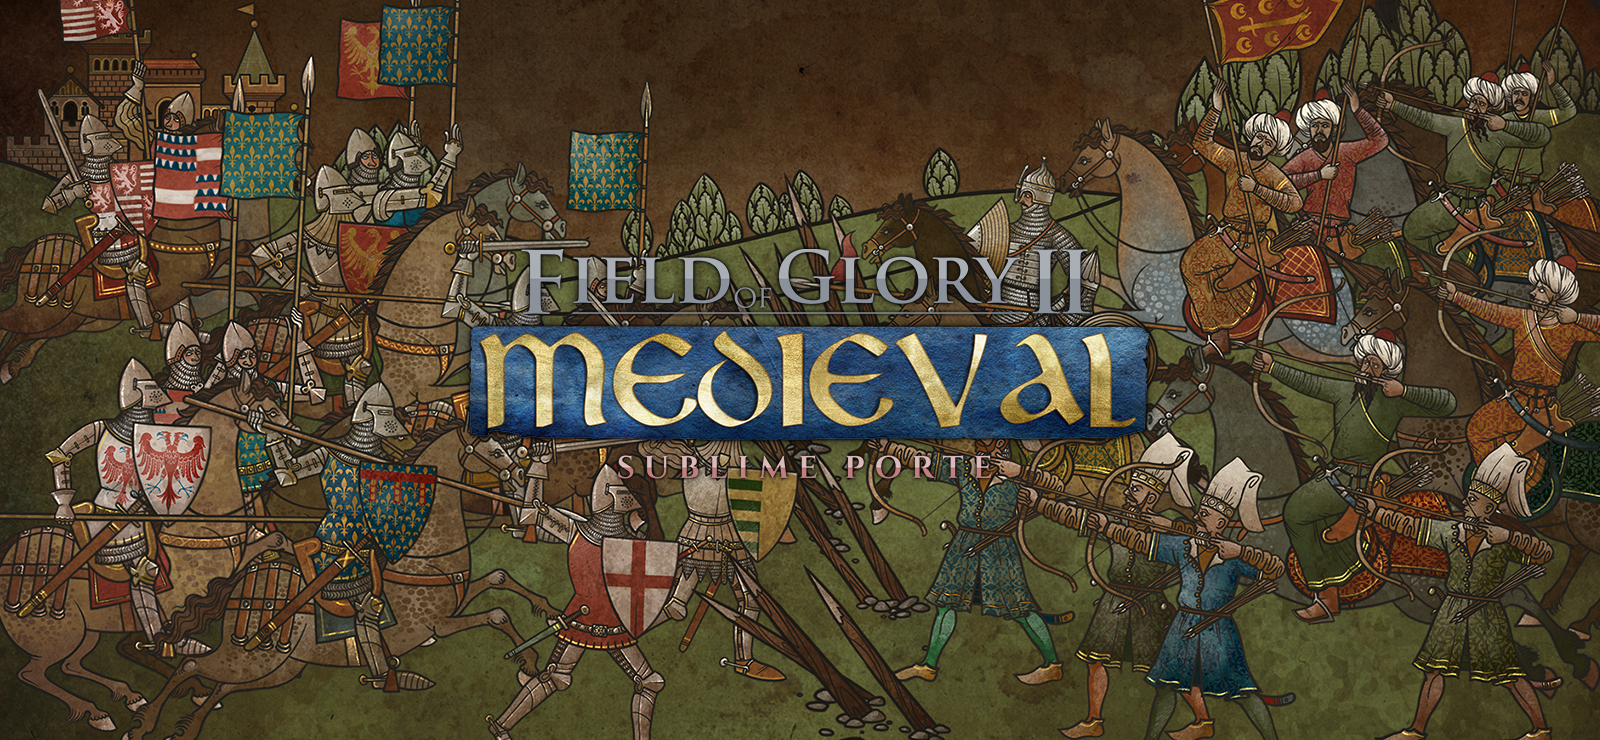 Field Of Glory II: Medieval - Sublime Porte